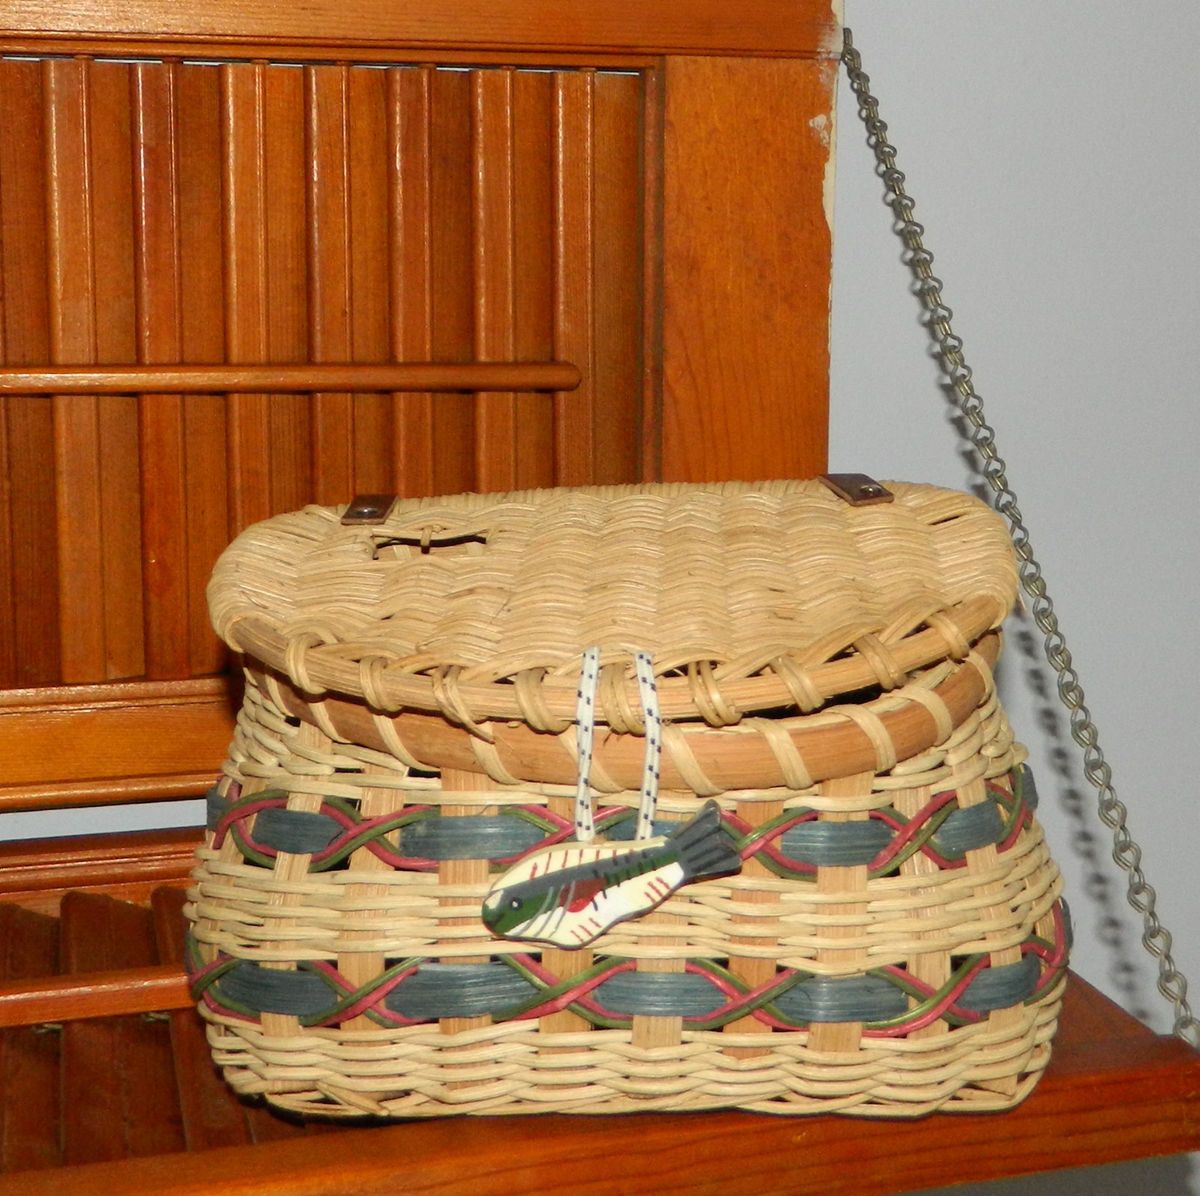 http://img0103o.popscreencdn.com/159342442_fun-decorative-fishing-creel-basket-cabin-decor.jpg